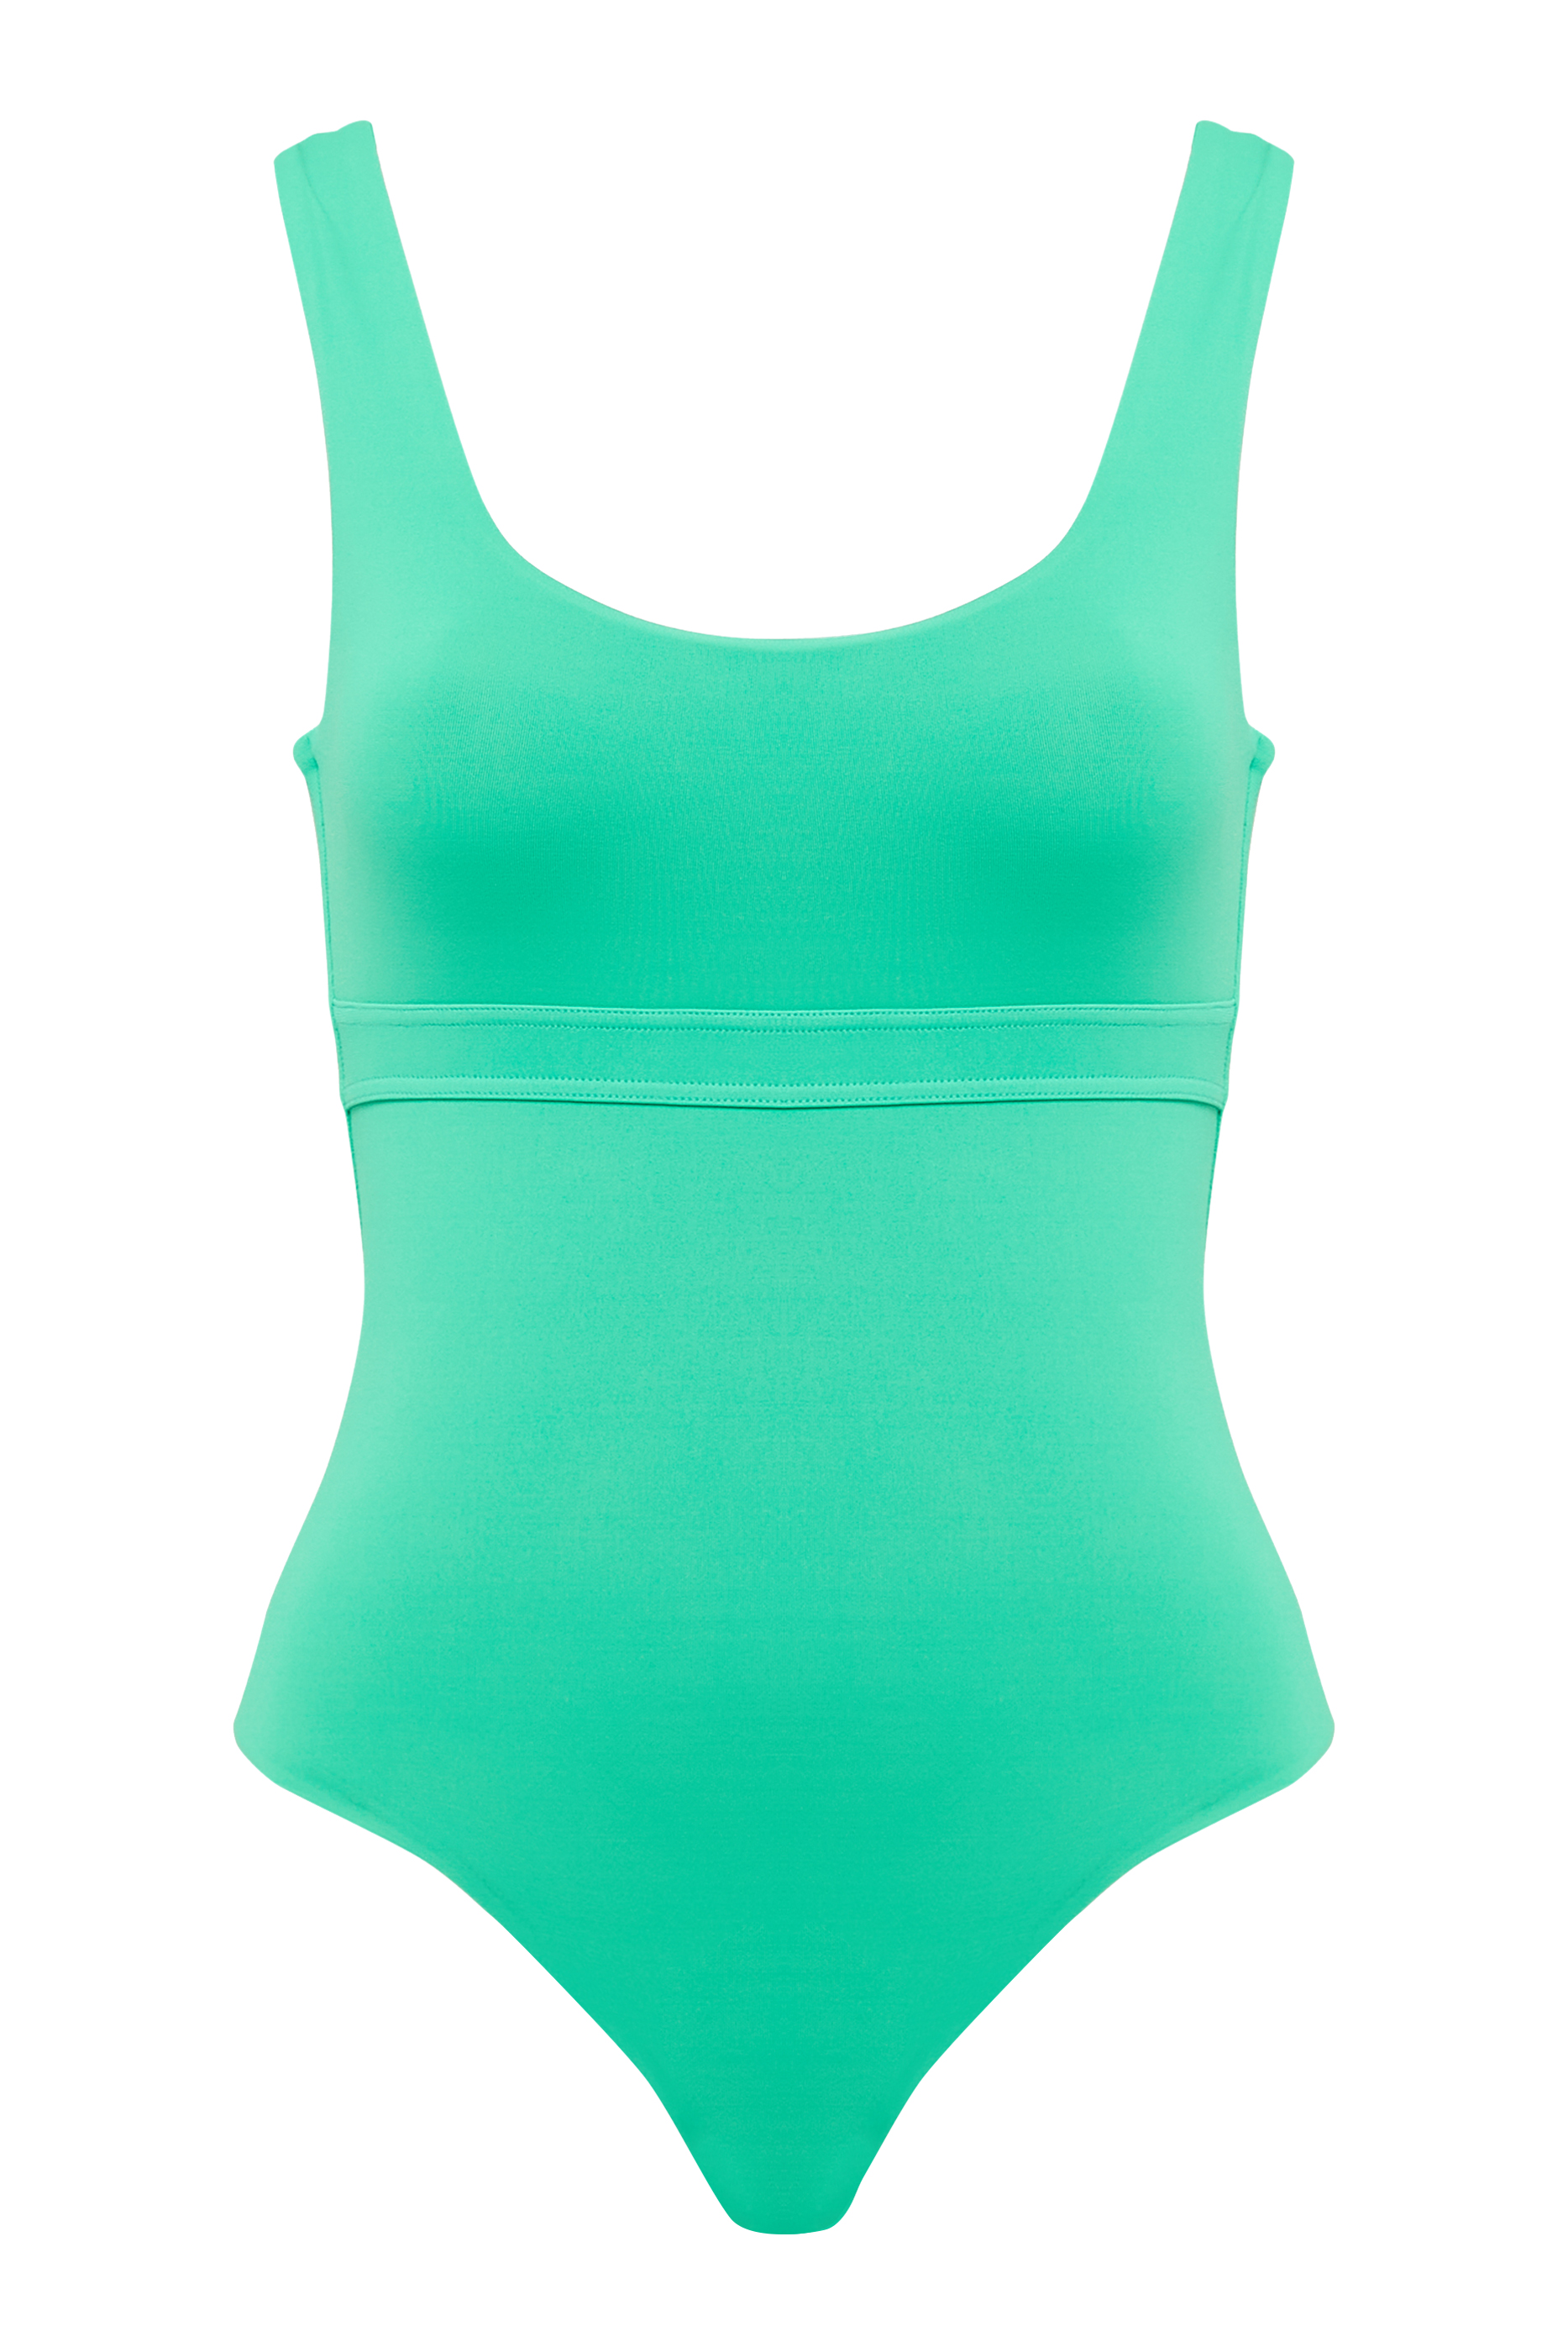 Buy Melissa Odabash Kos One-Piece Swimsuit for | Bloomingdale's KSA